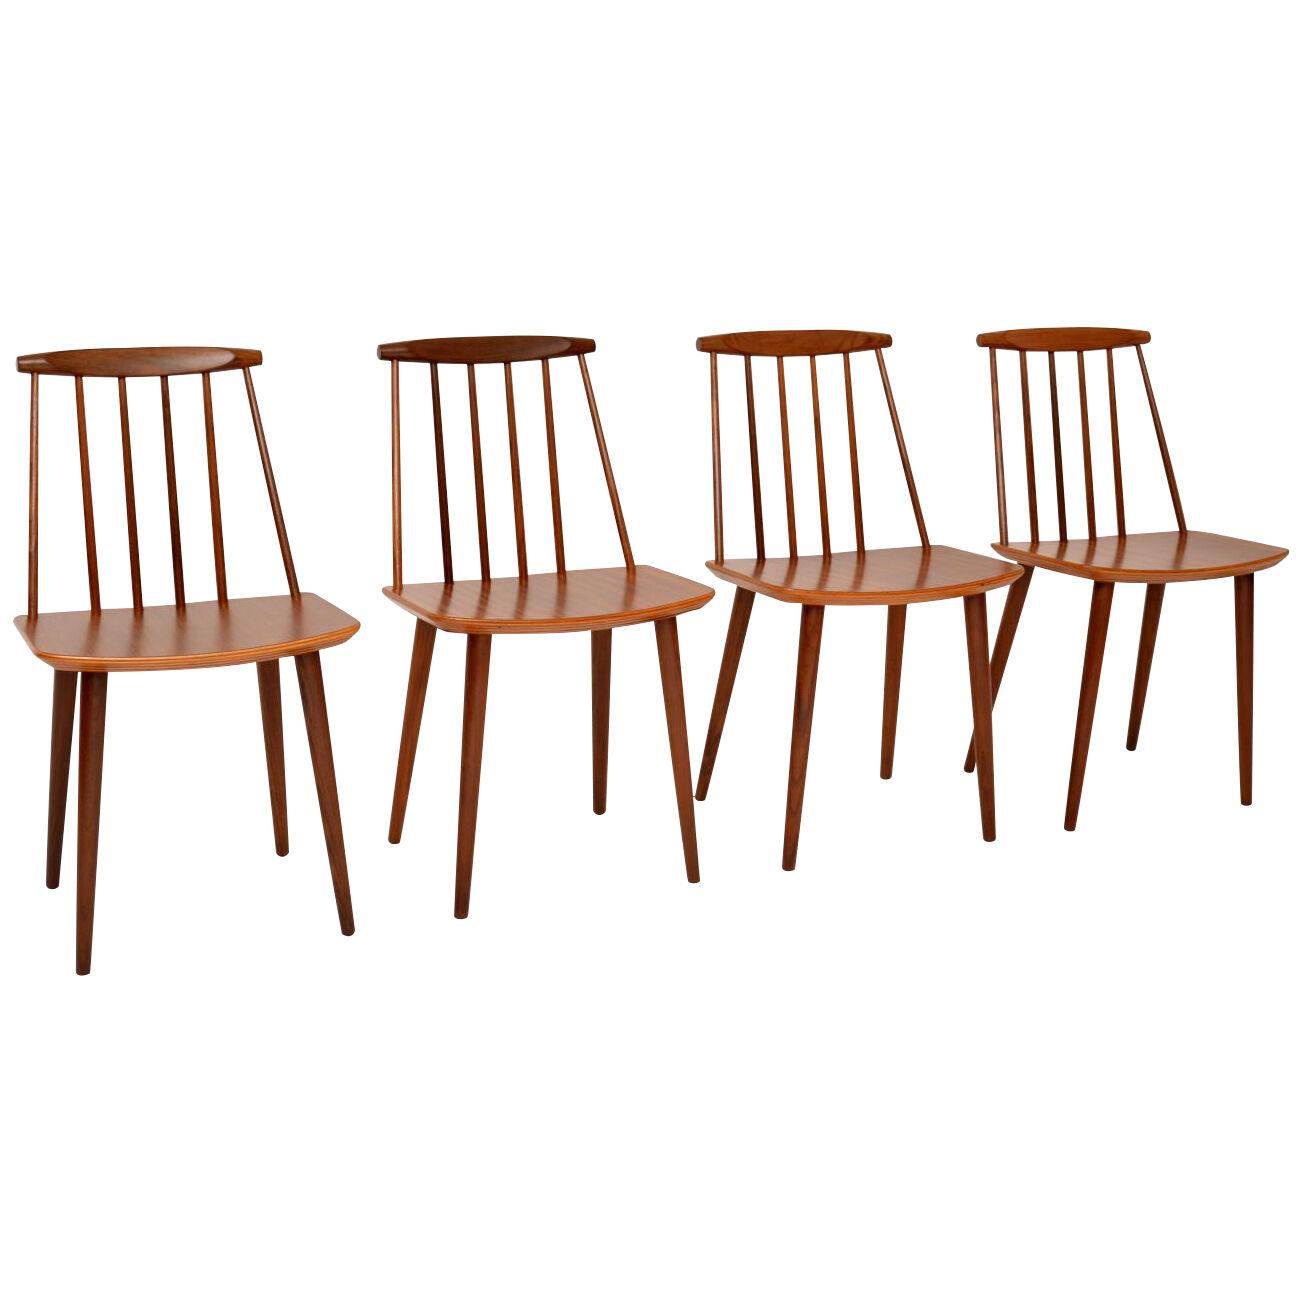 1960's Set of 4 Danish Teak Dining J77 Chairs by Folke Palsson